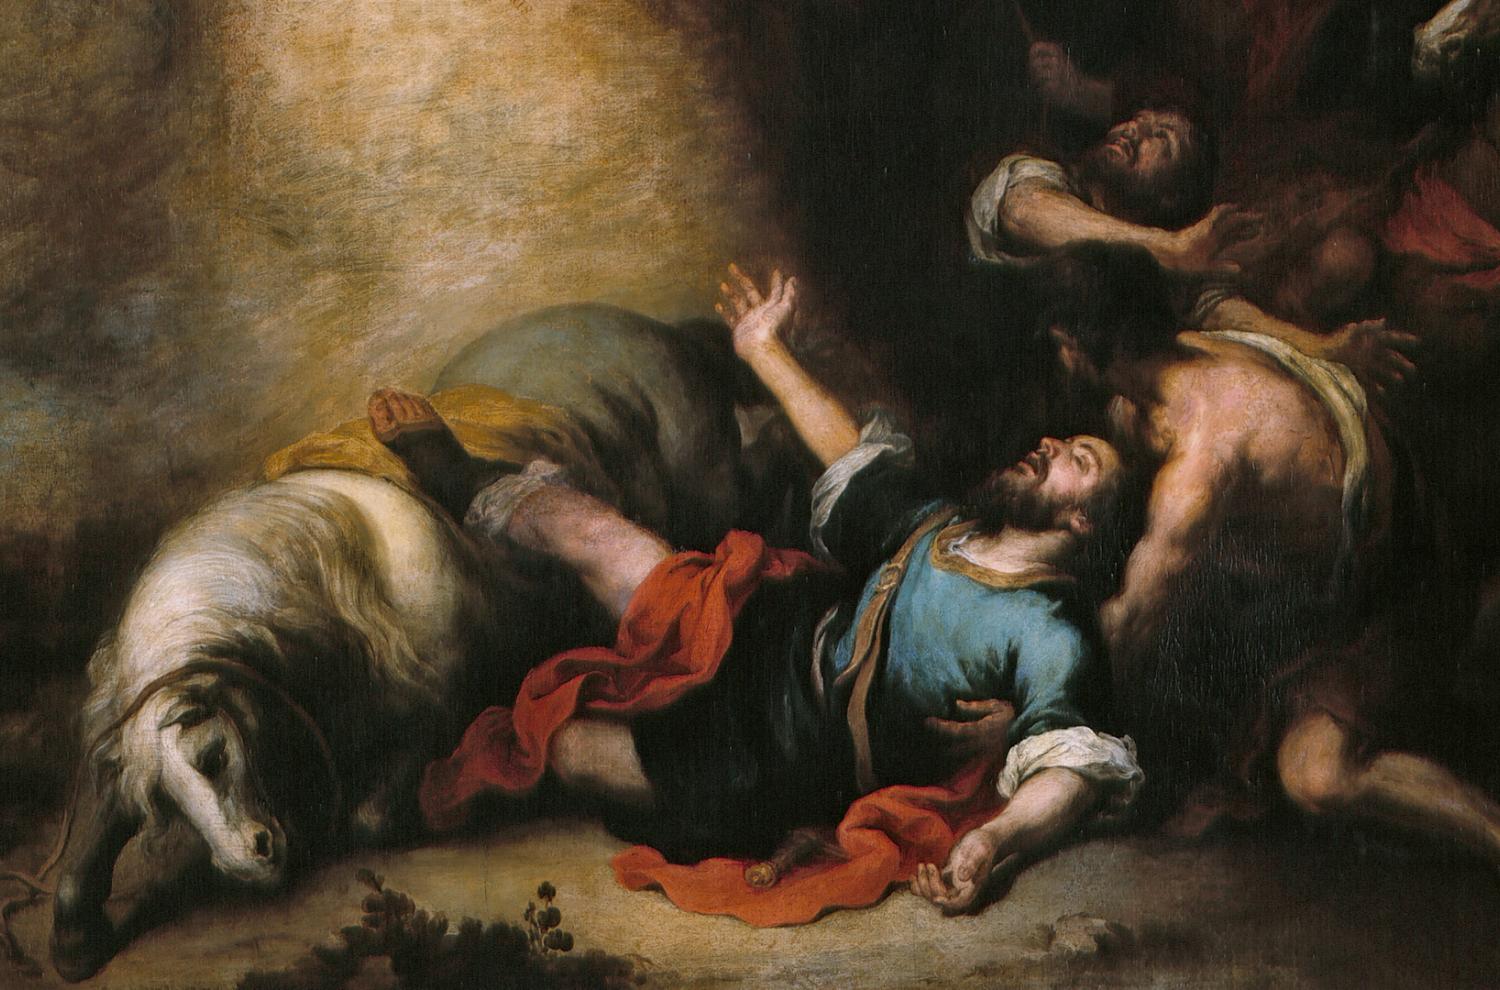 Detail from "The Conversion of Saint Paul" by Bartolomé Esteban Murillo. Public Domain Image.